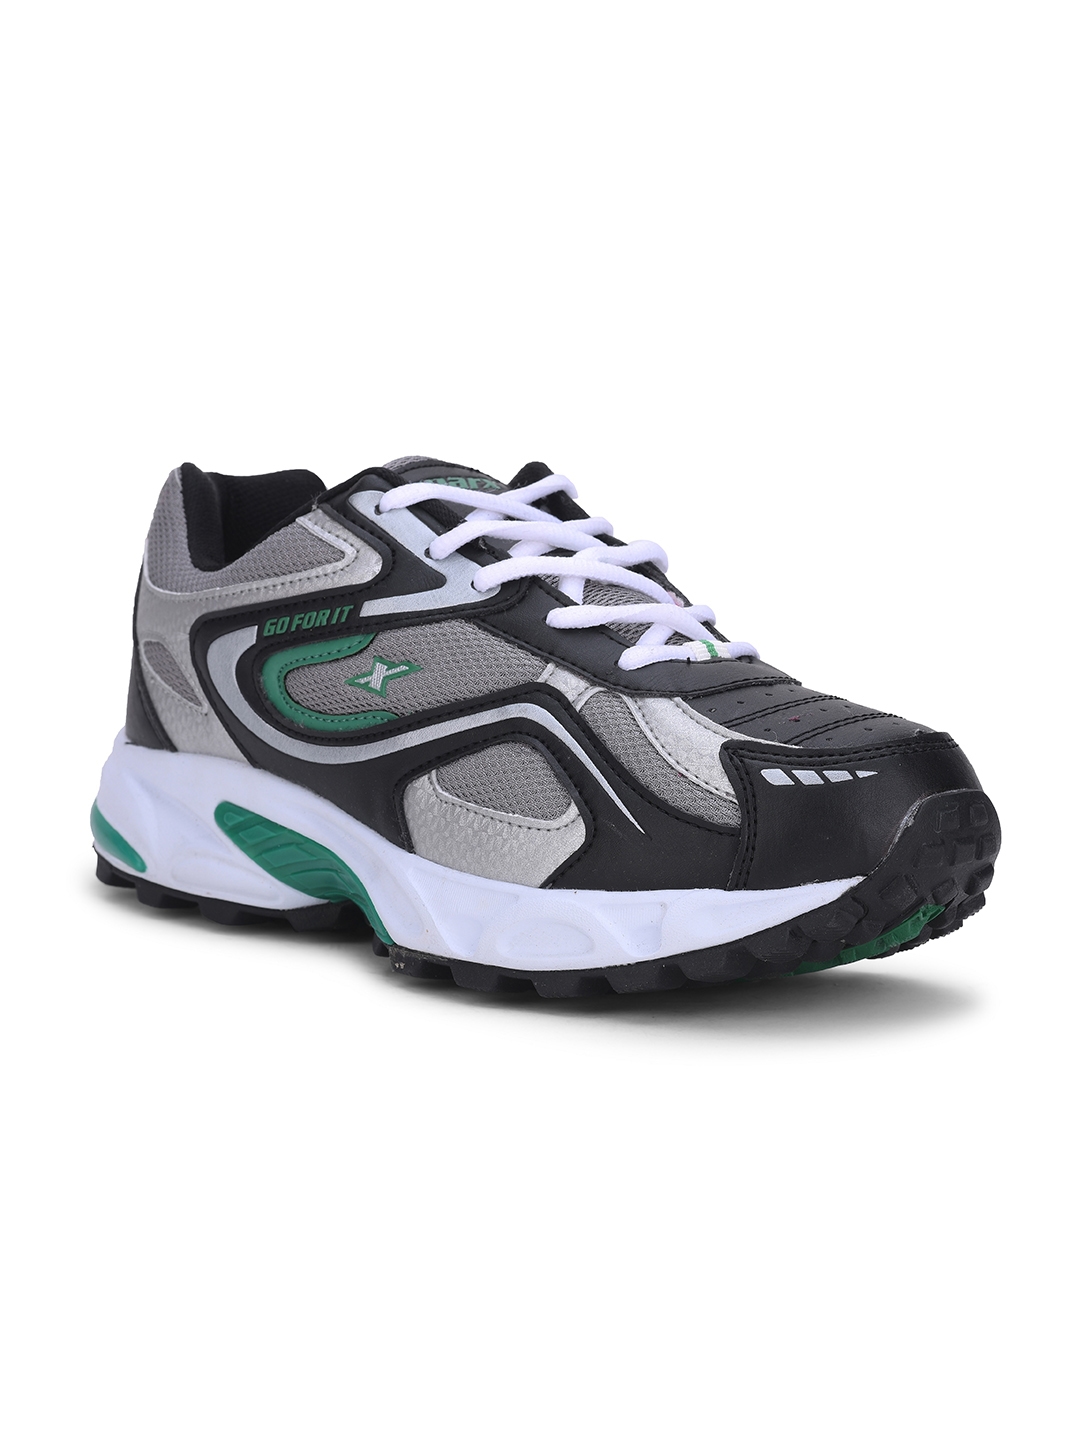 Sparx SM676 Running Shoes For Men  Buy Sparx SM676 Running Shoes For Men  Online at Best Price  Shop Online for Footwears in India  Flipkartcom